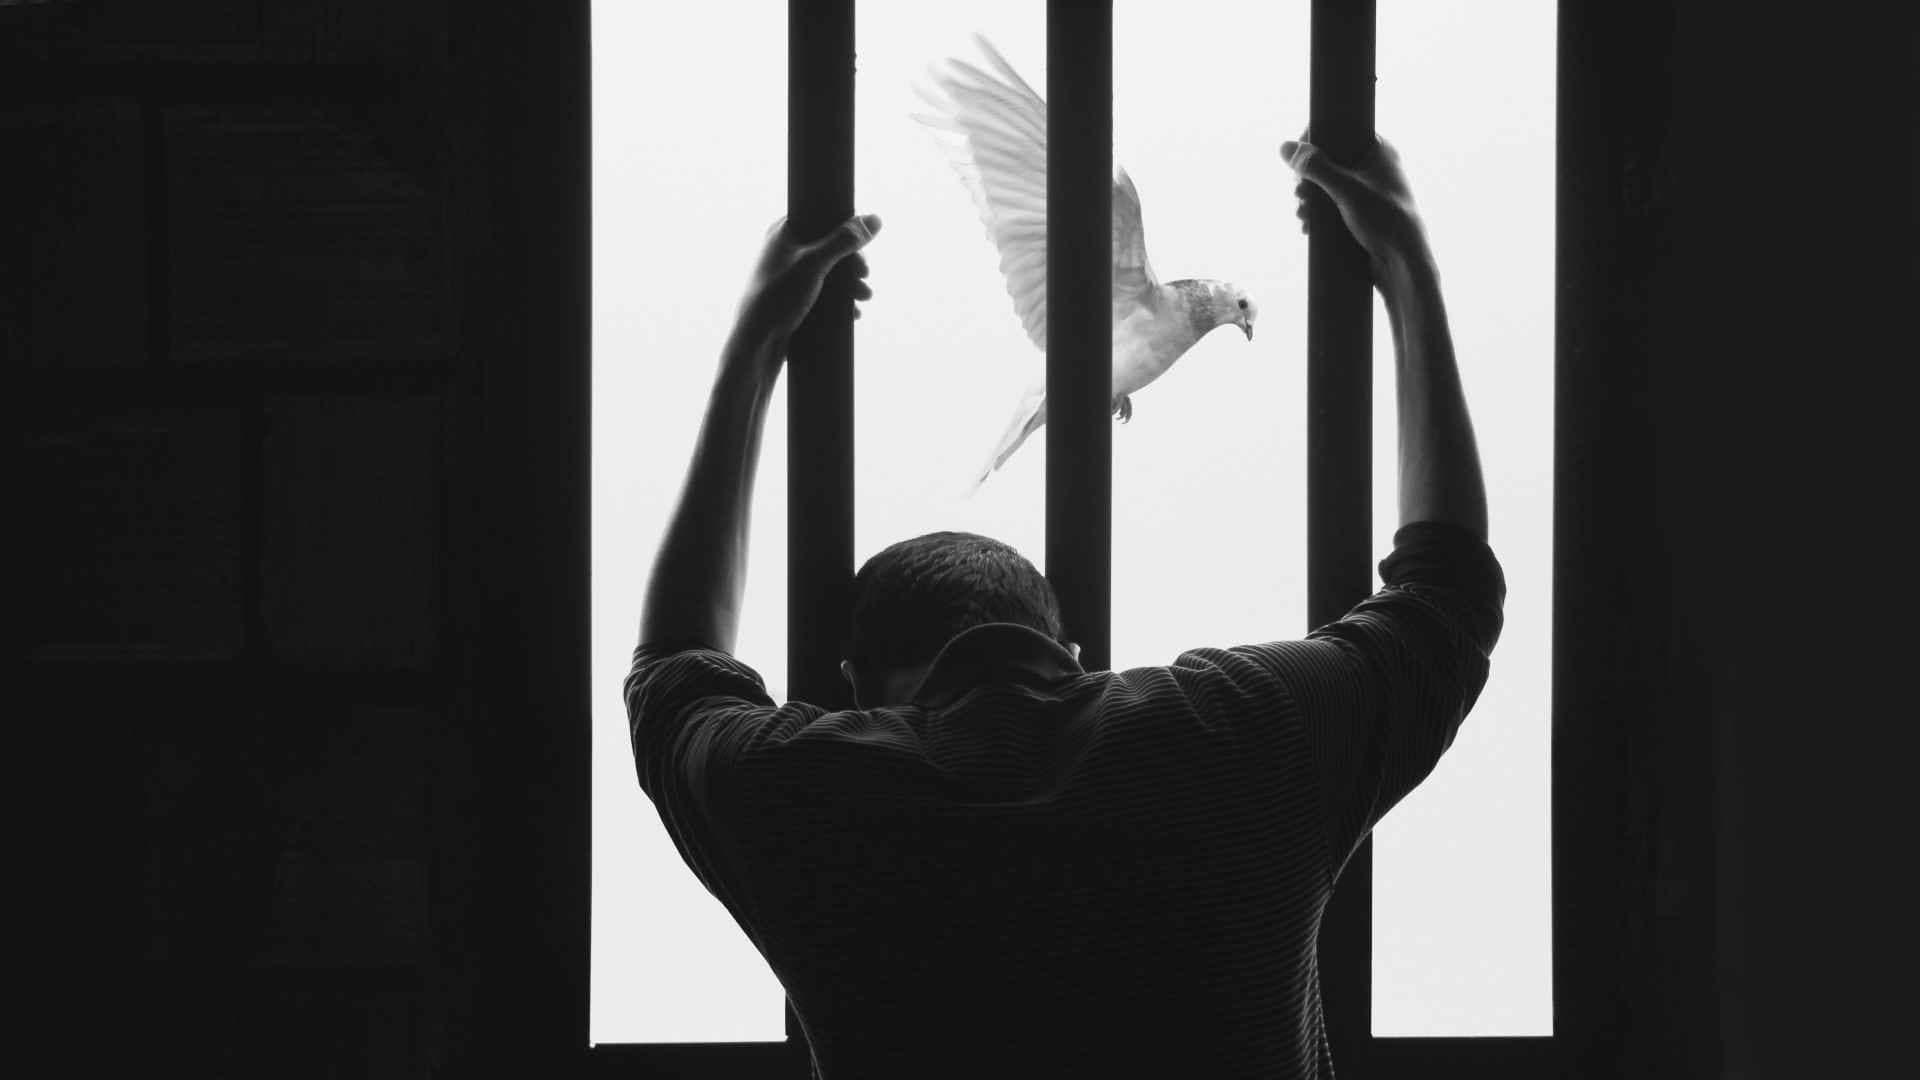 man behind bars with bird